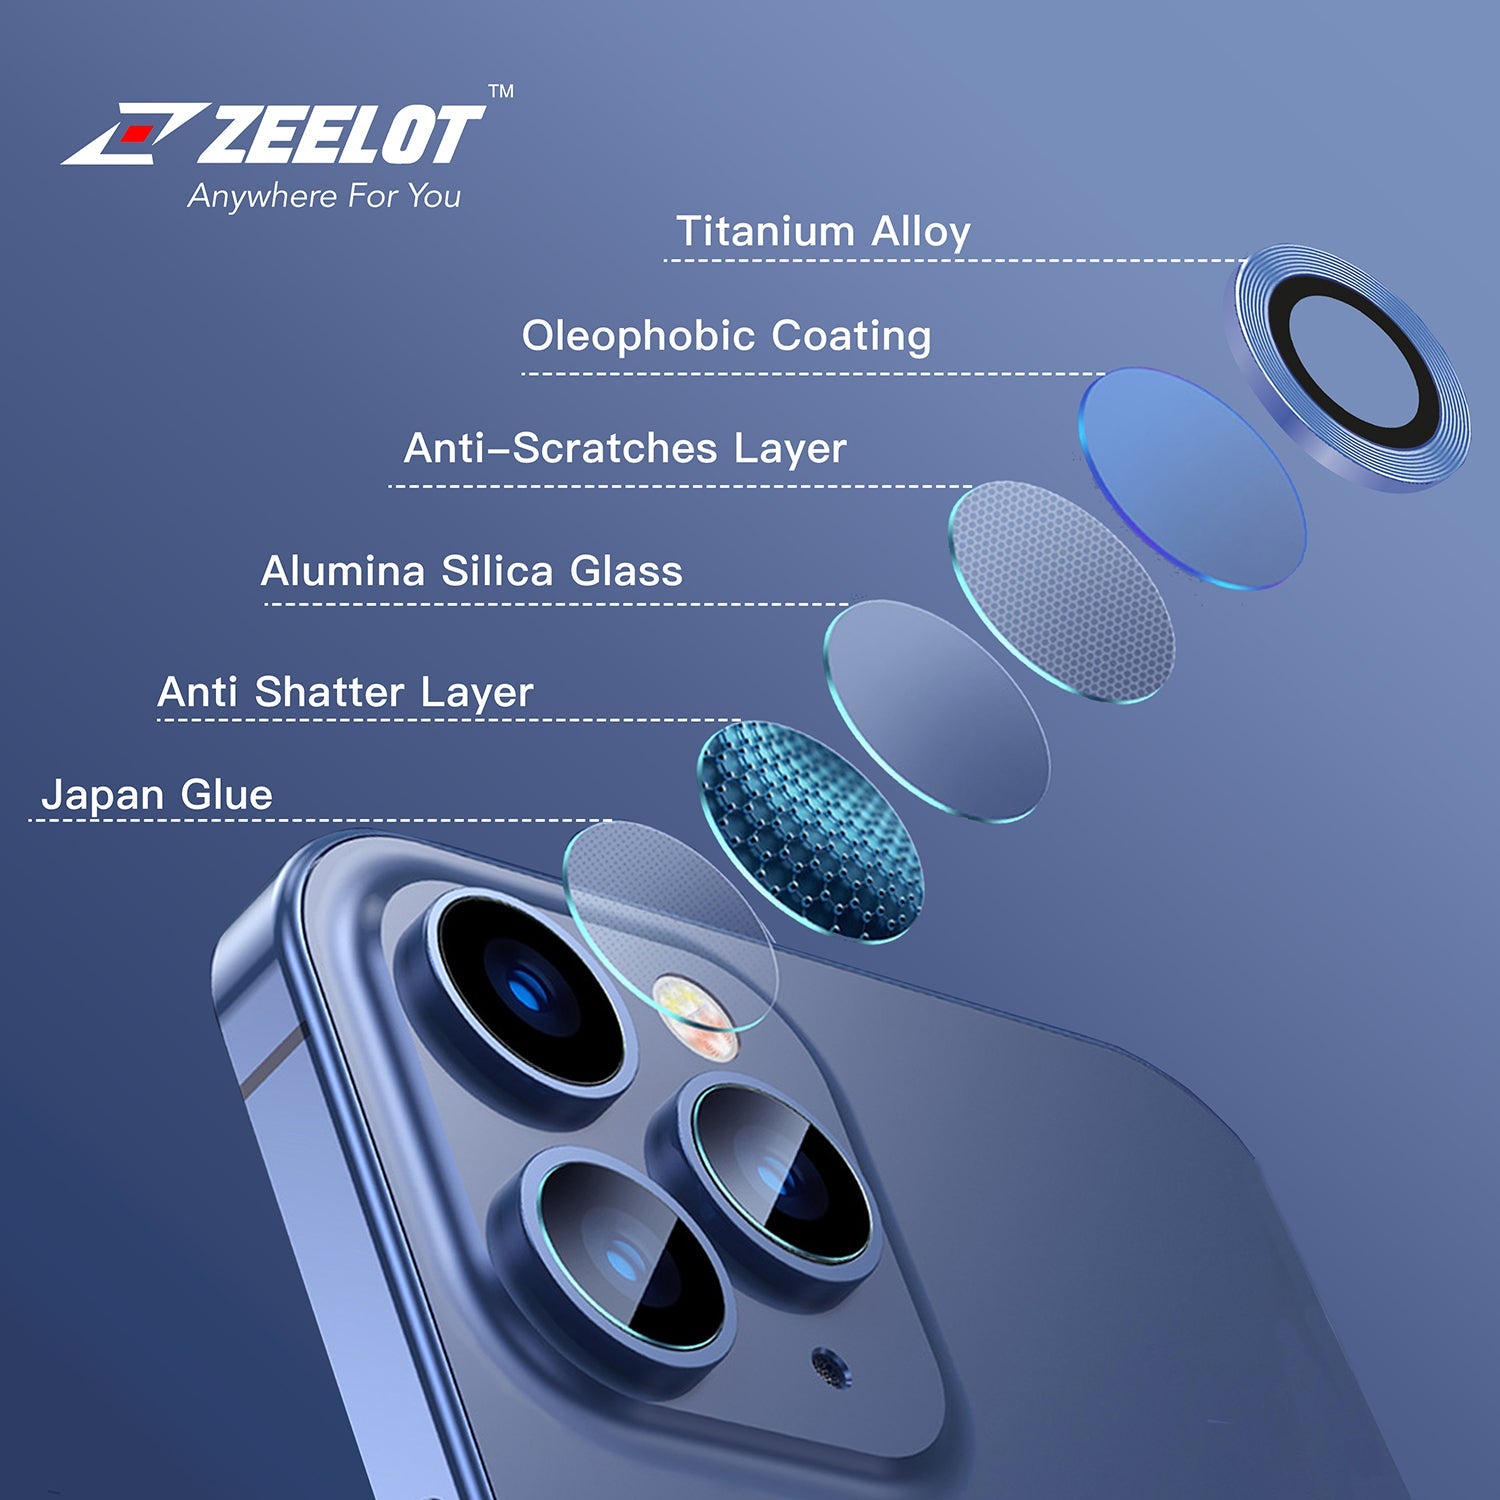 ZEELOT Titanium Steel Diamond Design with Lens Protector for iPhone 12 Pro 6.1" (Three Cameras), Silver Default ZEELOT 